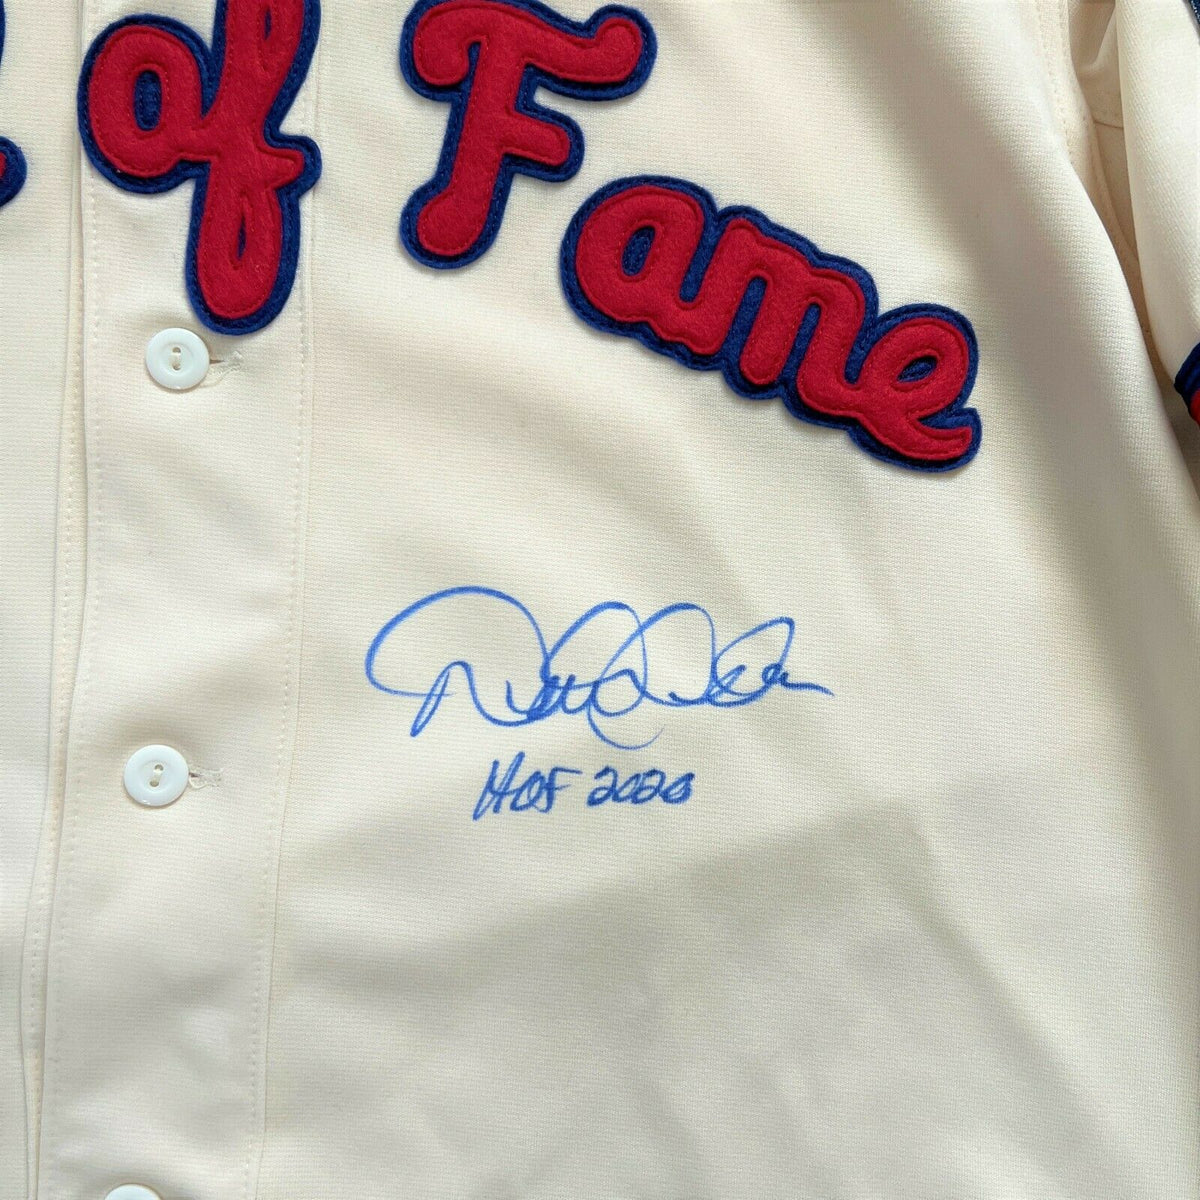 Derek Jeter Signed New York Yankees Majestic MLB Jersey w/ Jeter  Commerative Patch (JSA LOA)